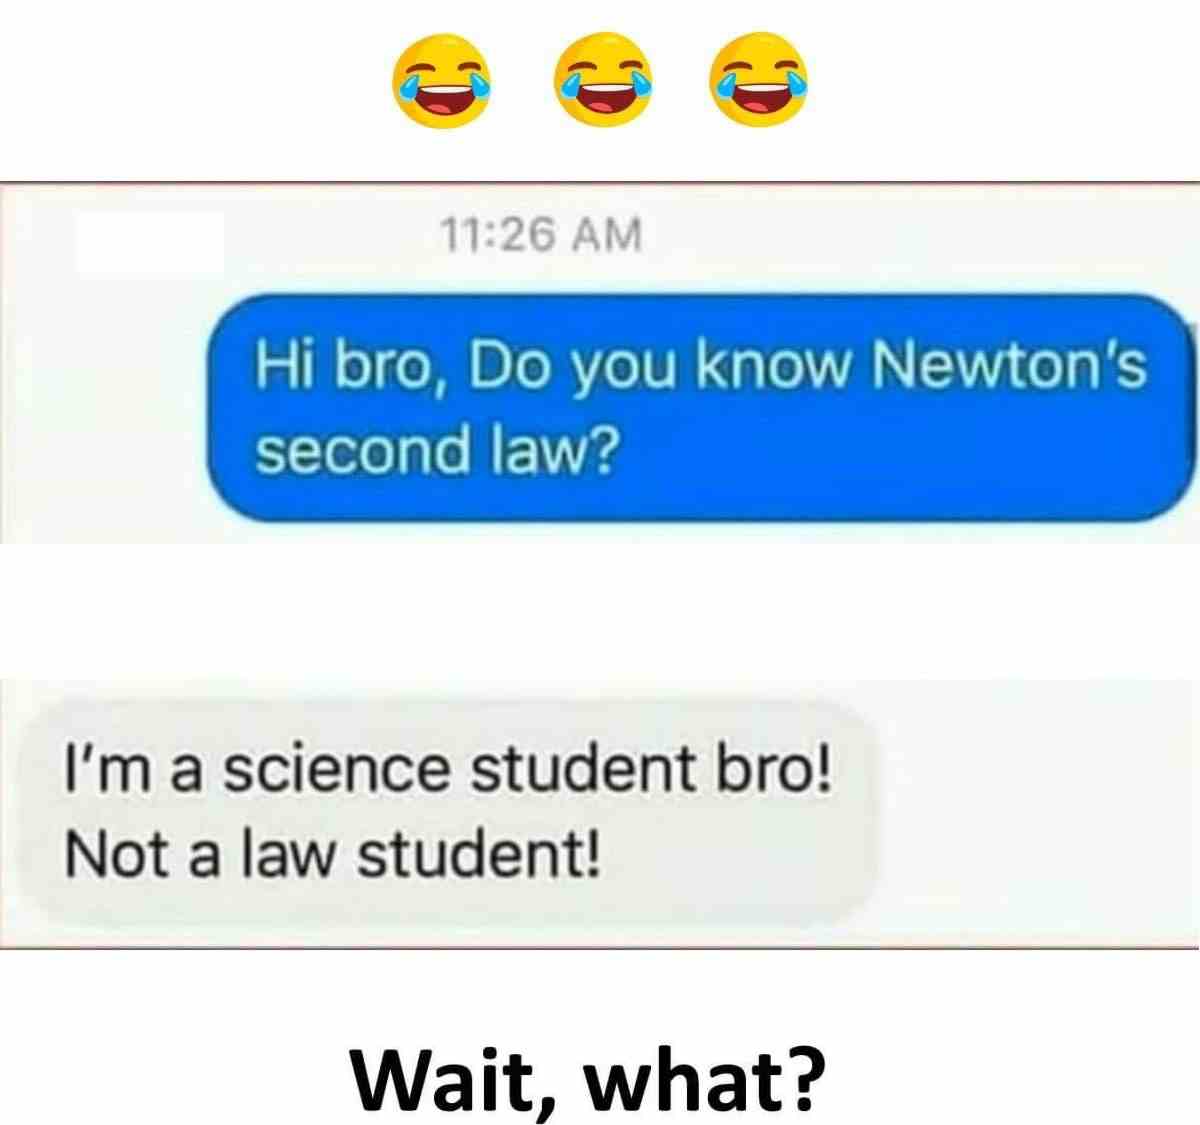 Hi bro, Do you know Newton's second law?